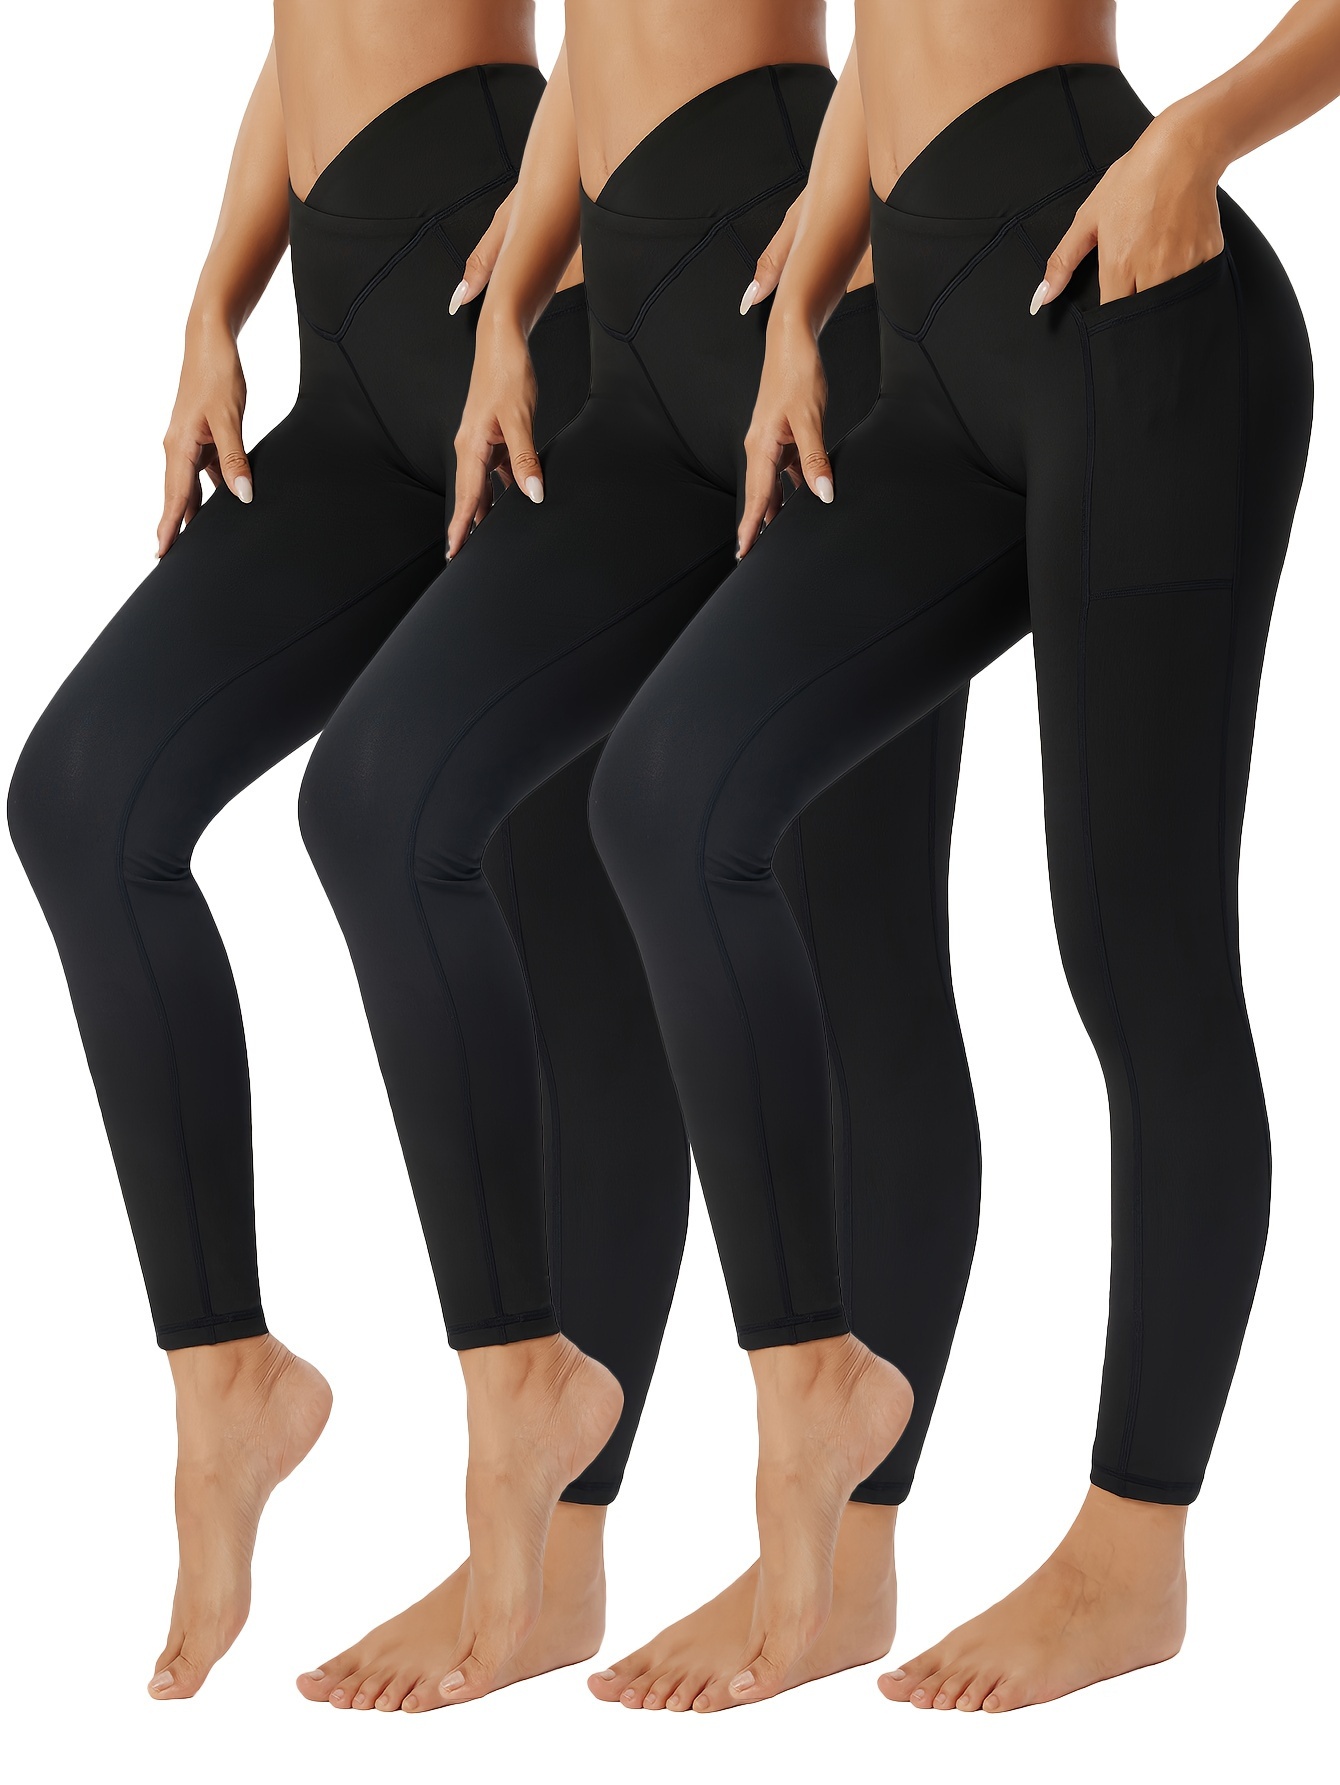 Hfyihgf V Cross Waist Leggings for Women Tummy Control Soft Workout Running  High Waisted Non See-Through Yoga Pants(Blue,M) 